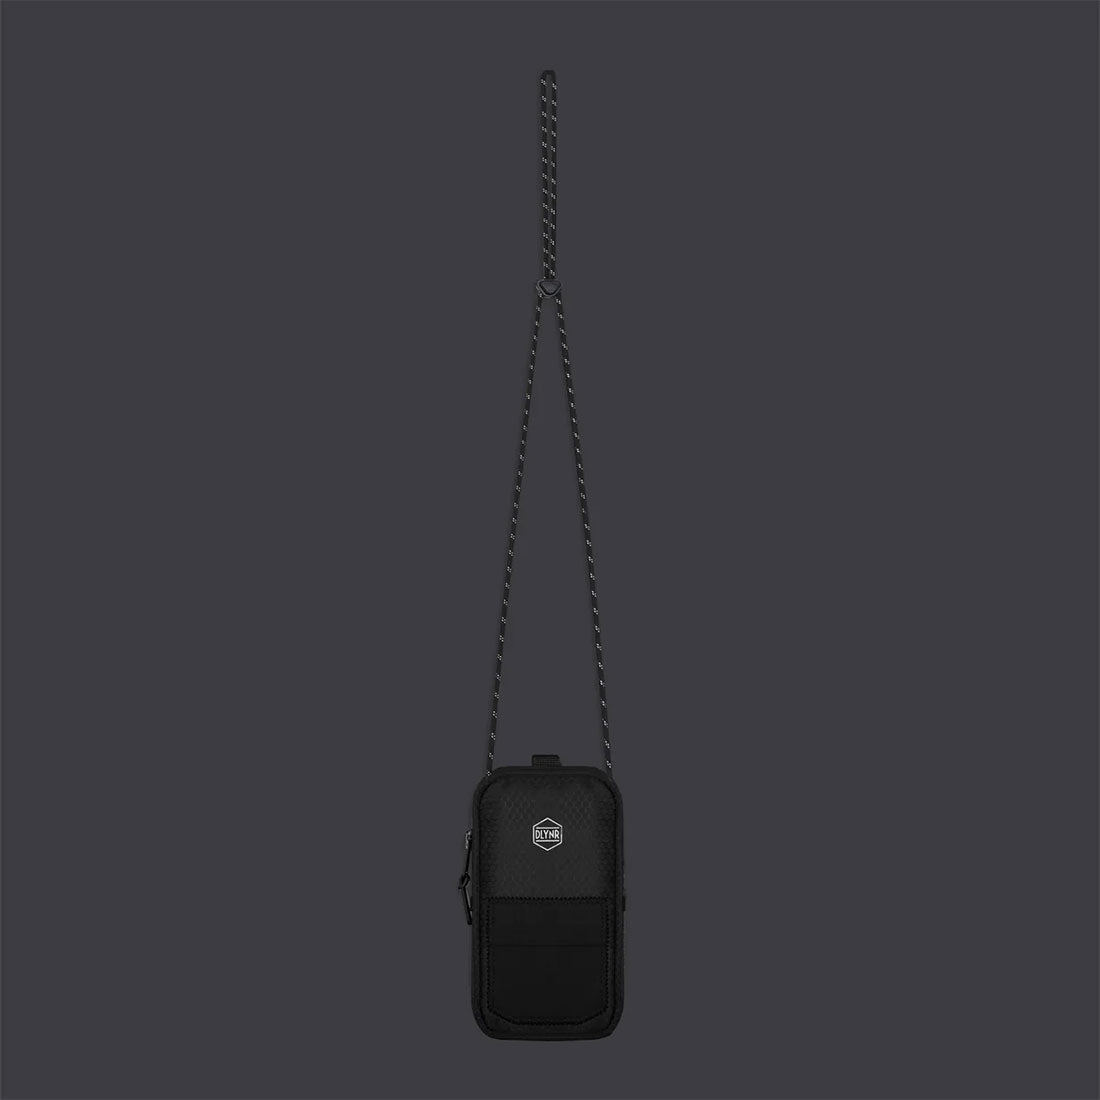 Dolly Noire Cell Phone Case - Modular Phone Bag - Black